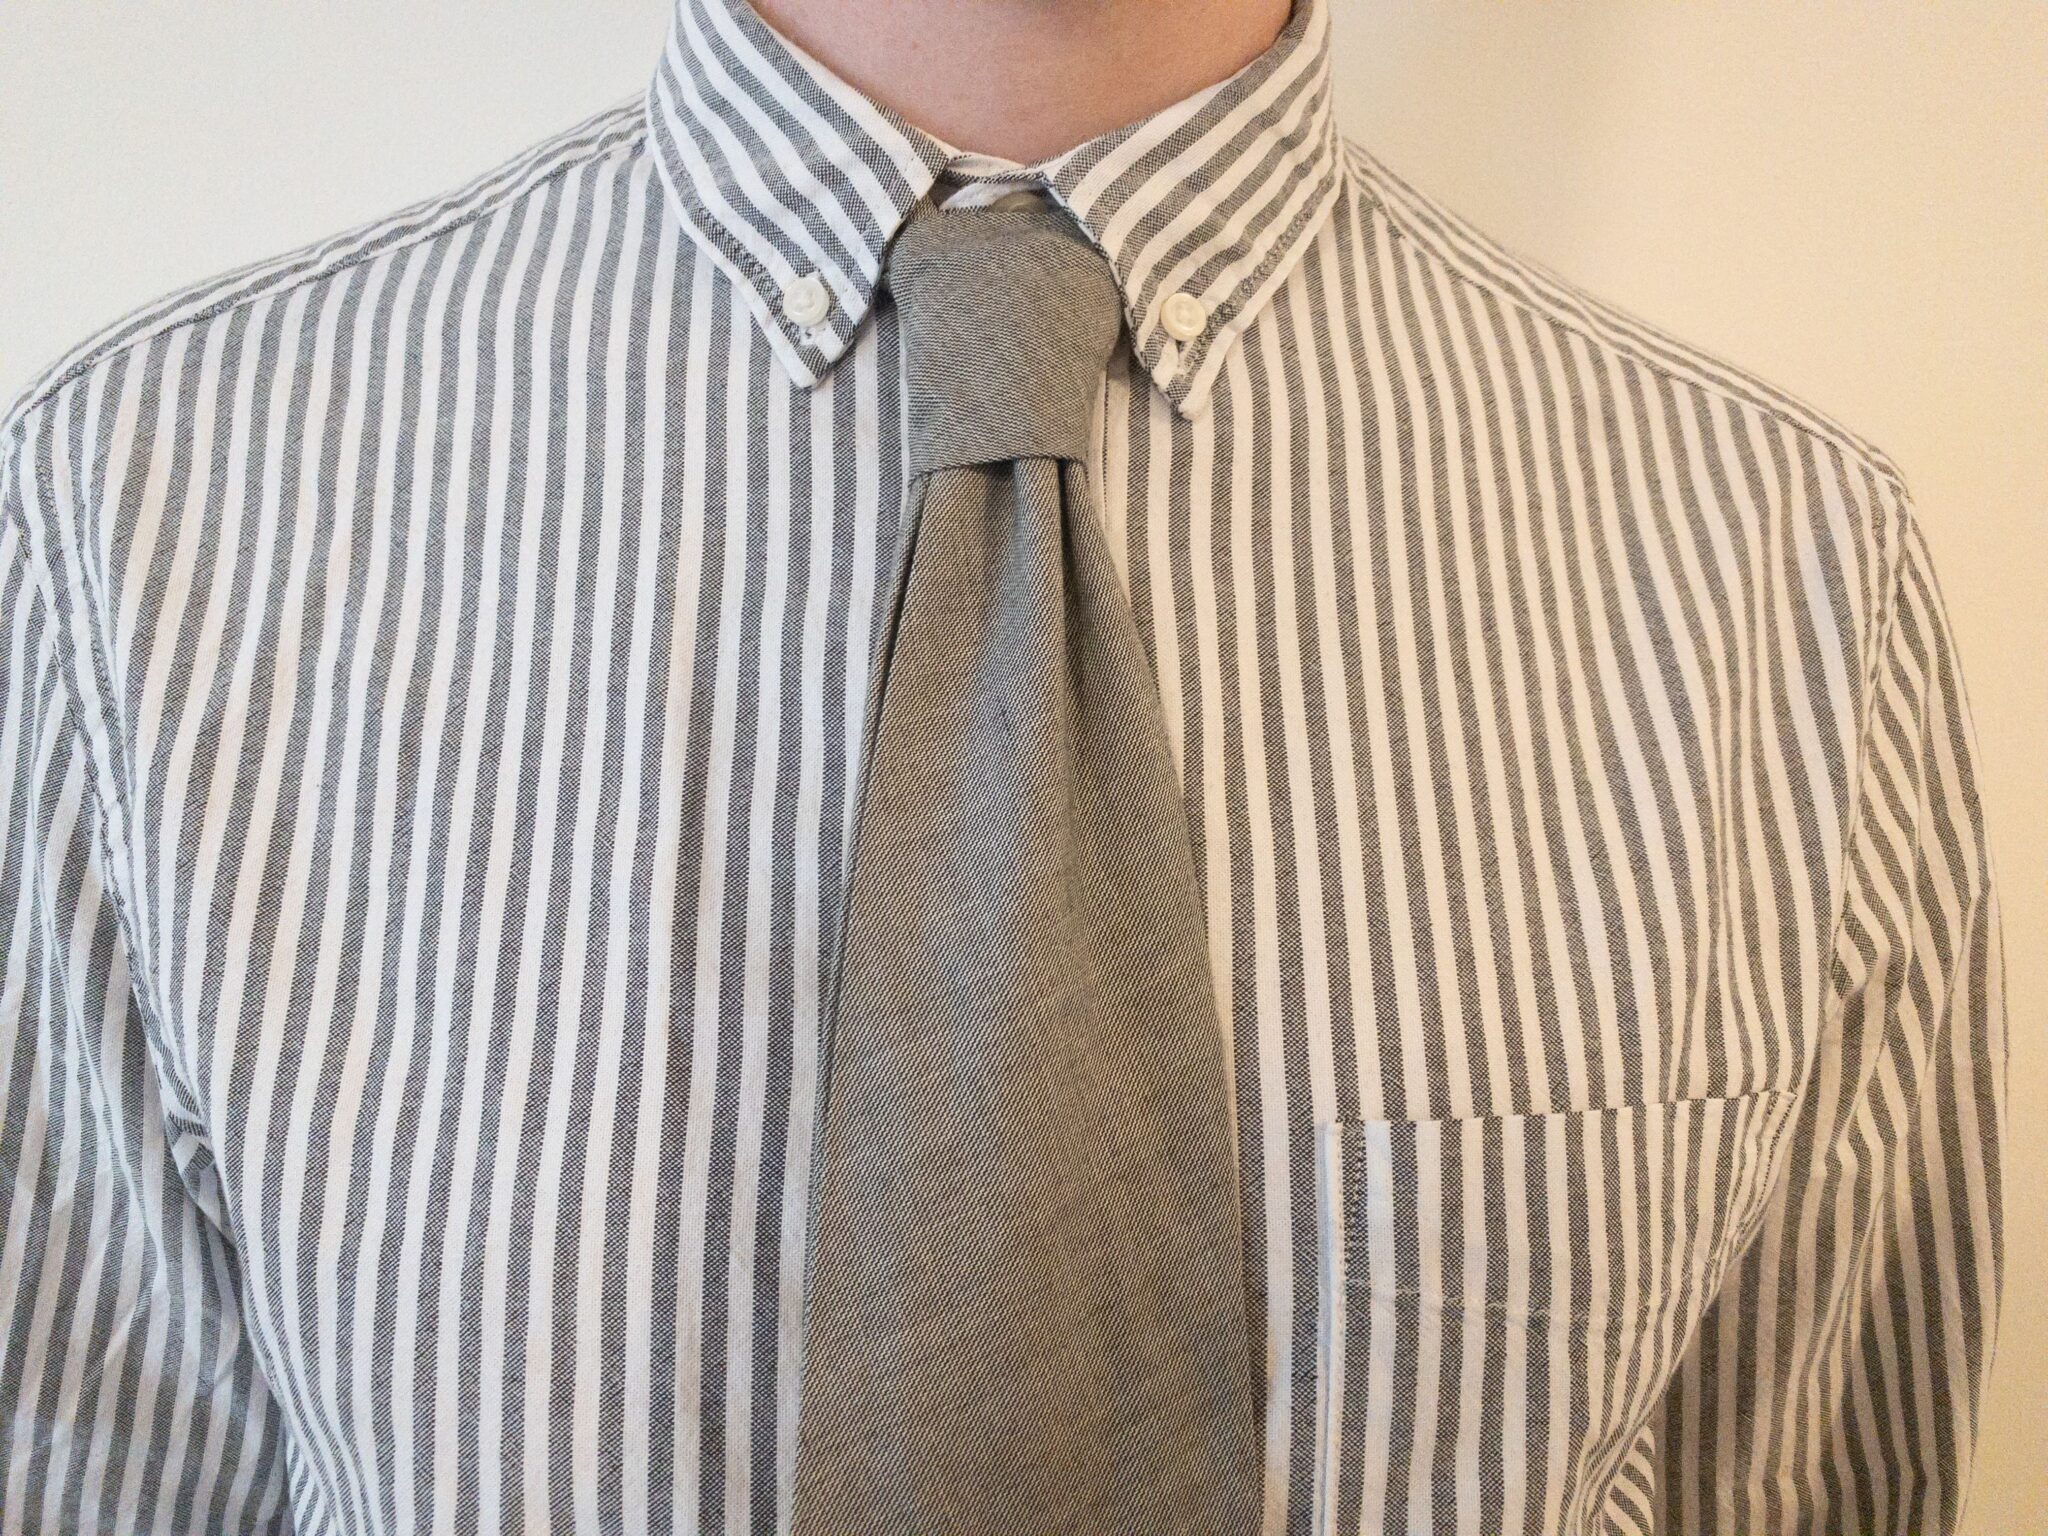 Graue Krawatte auf grau-weiß gestreiftem Hemd | DIY Krawatte selber machen